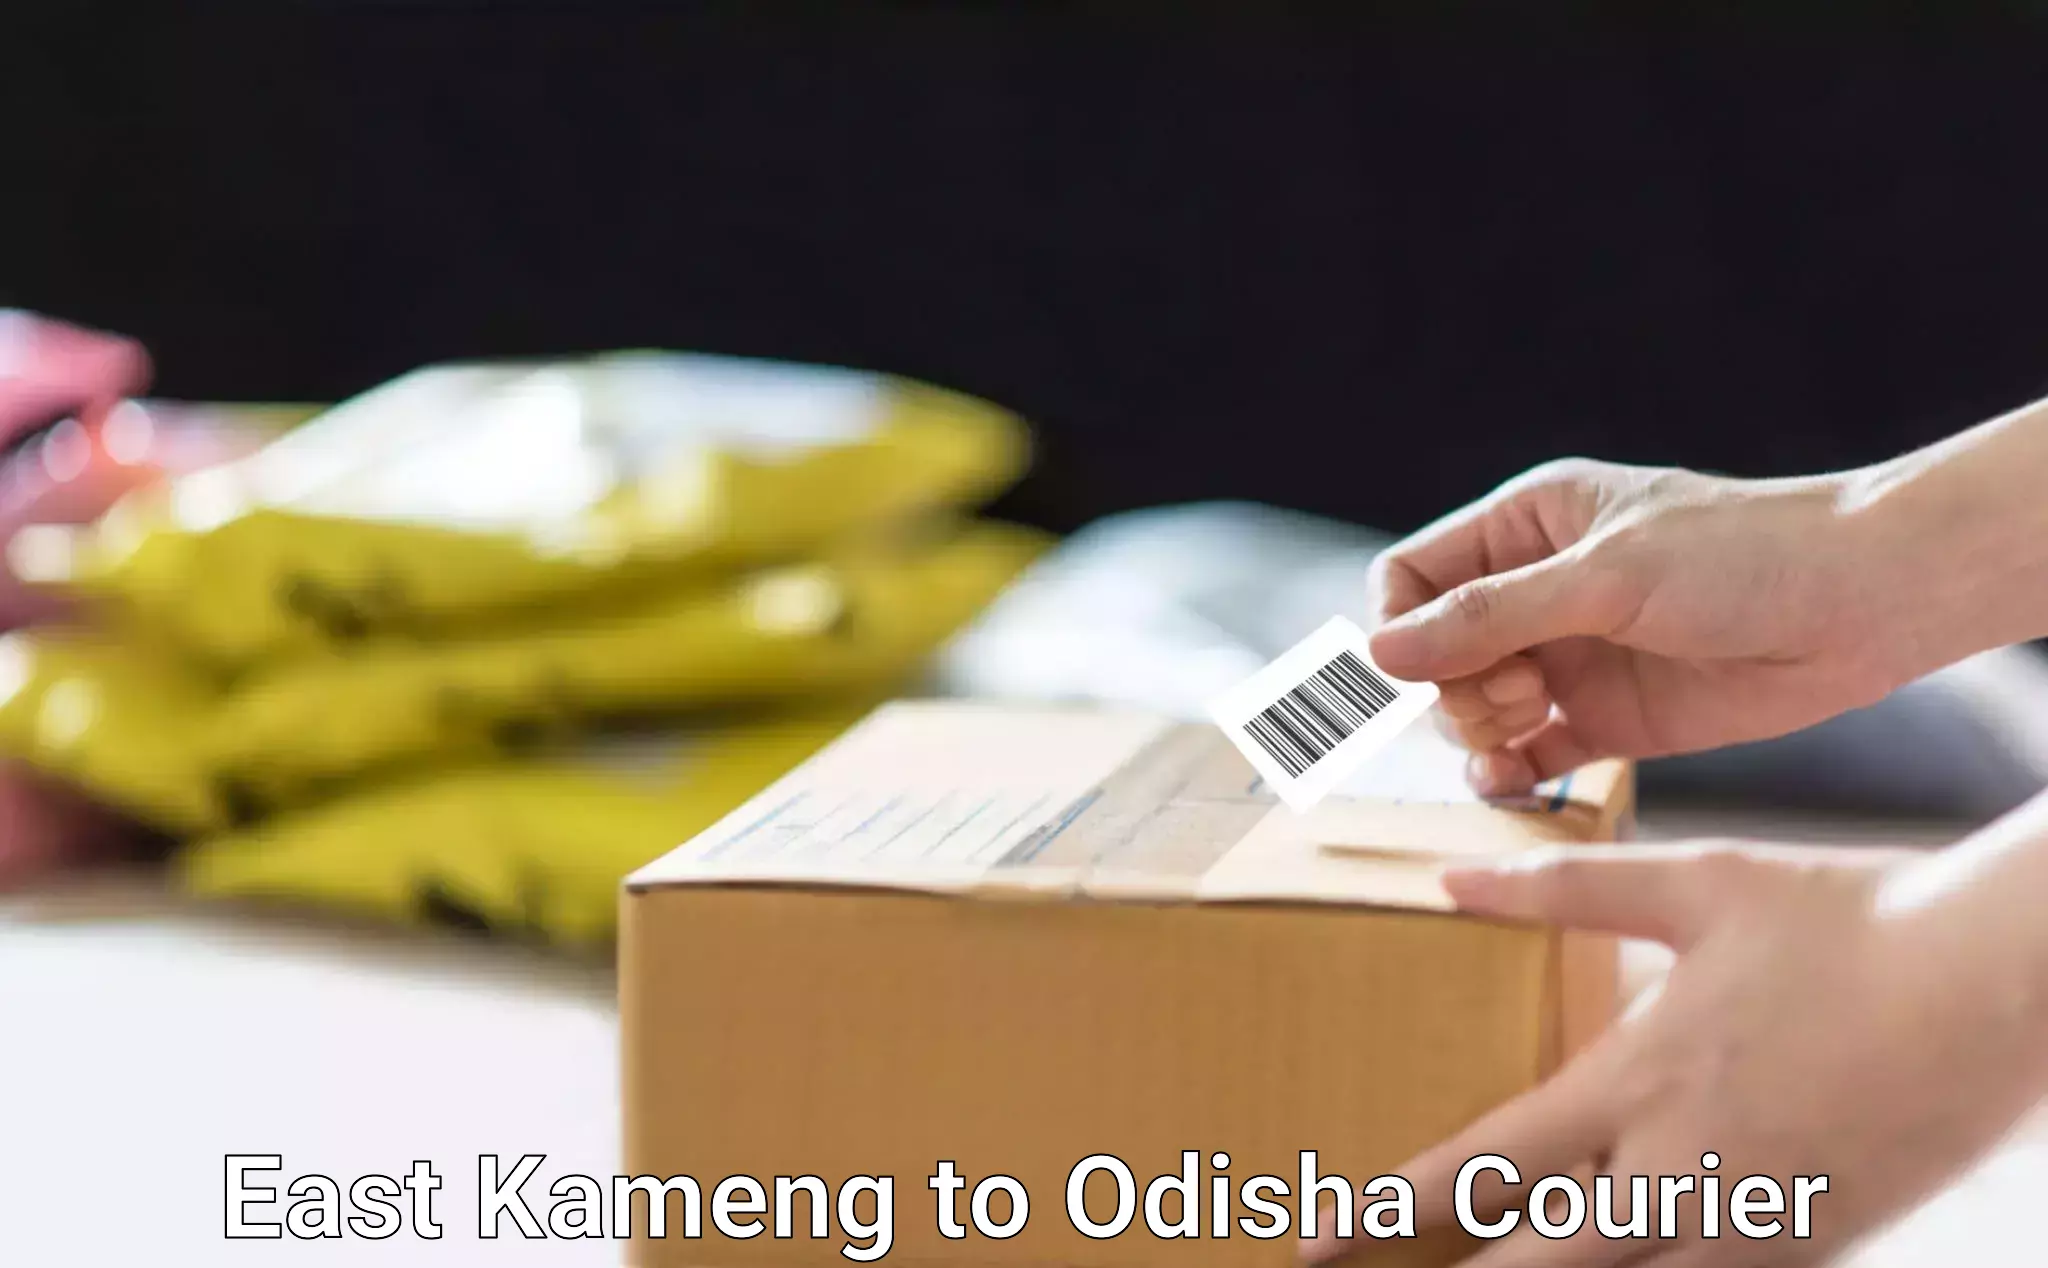 Business delivery service East Kameng to Odisha